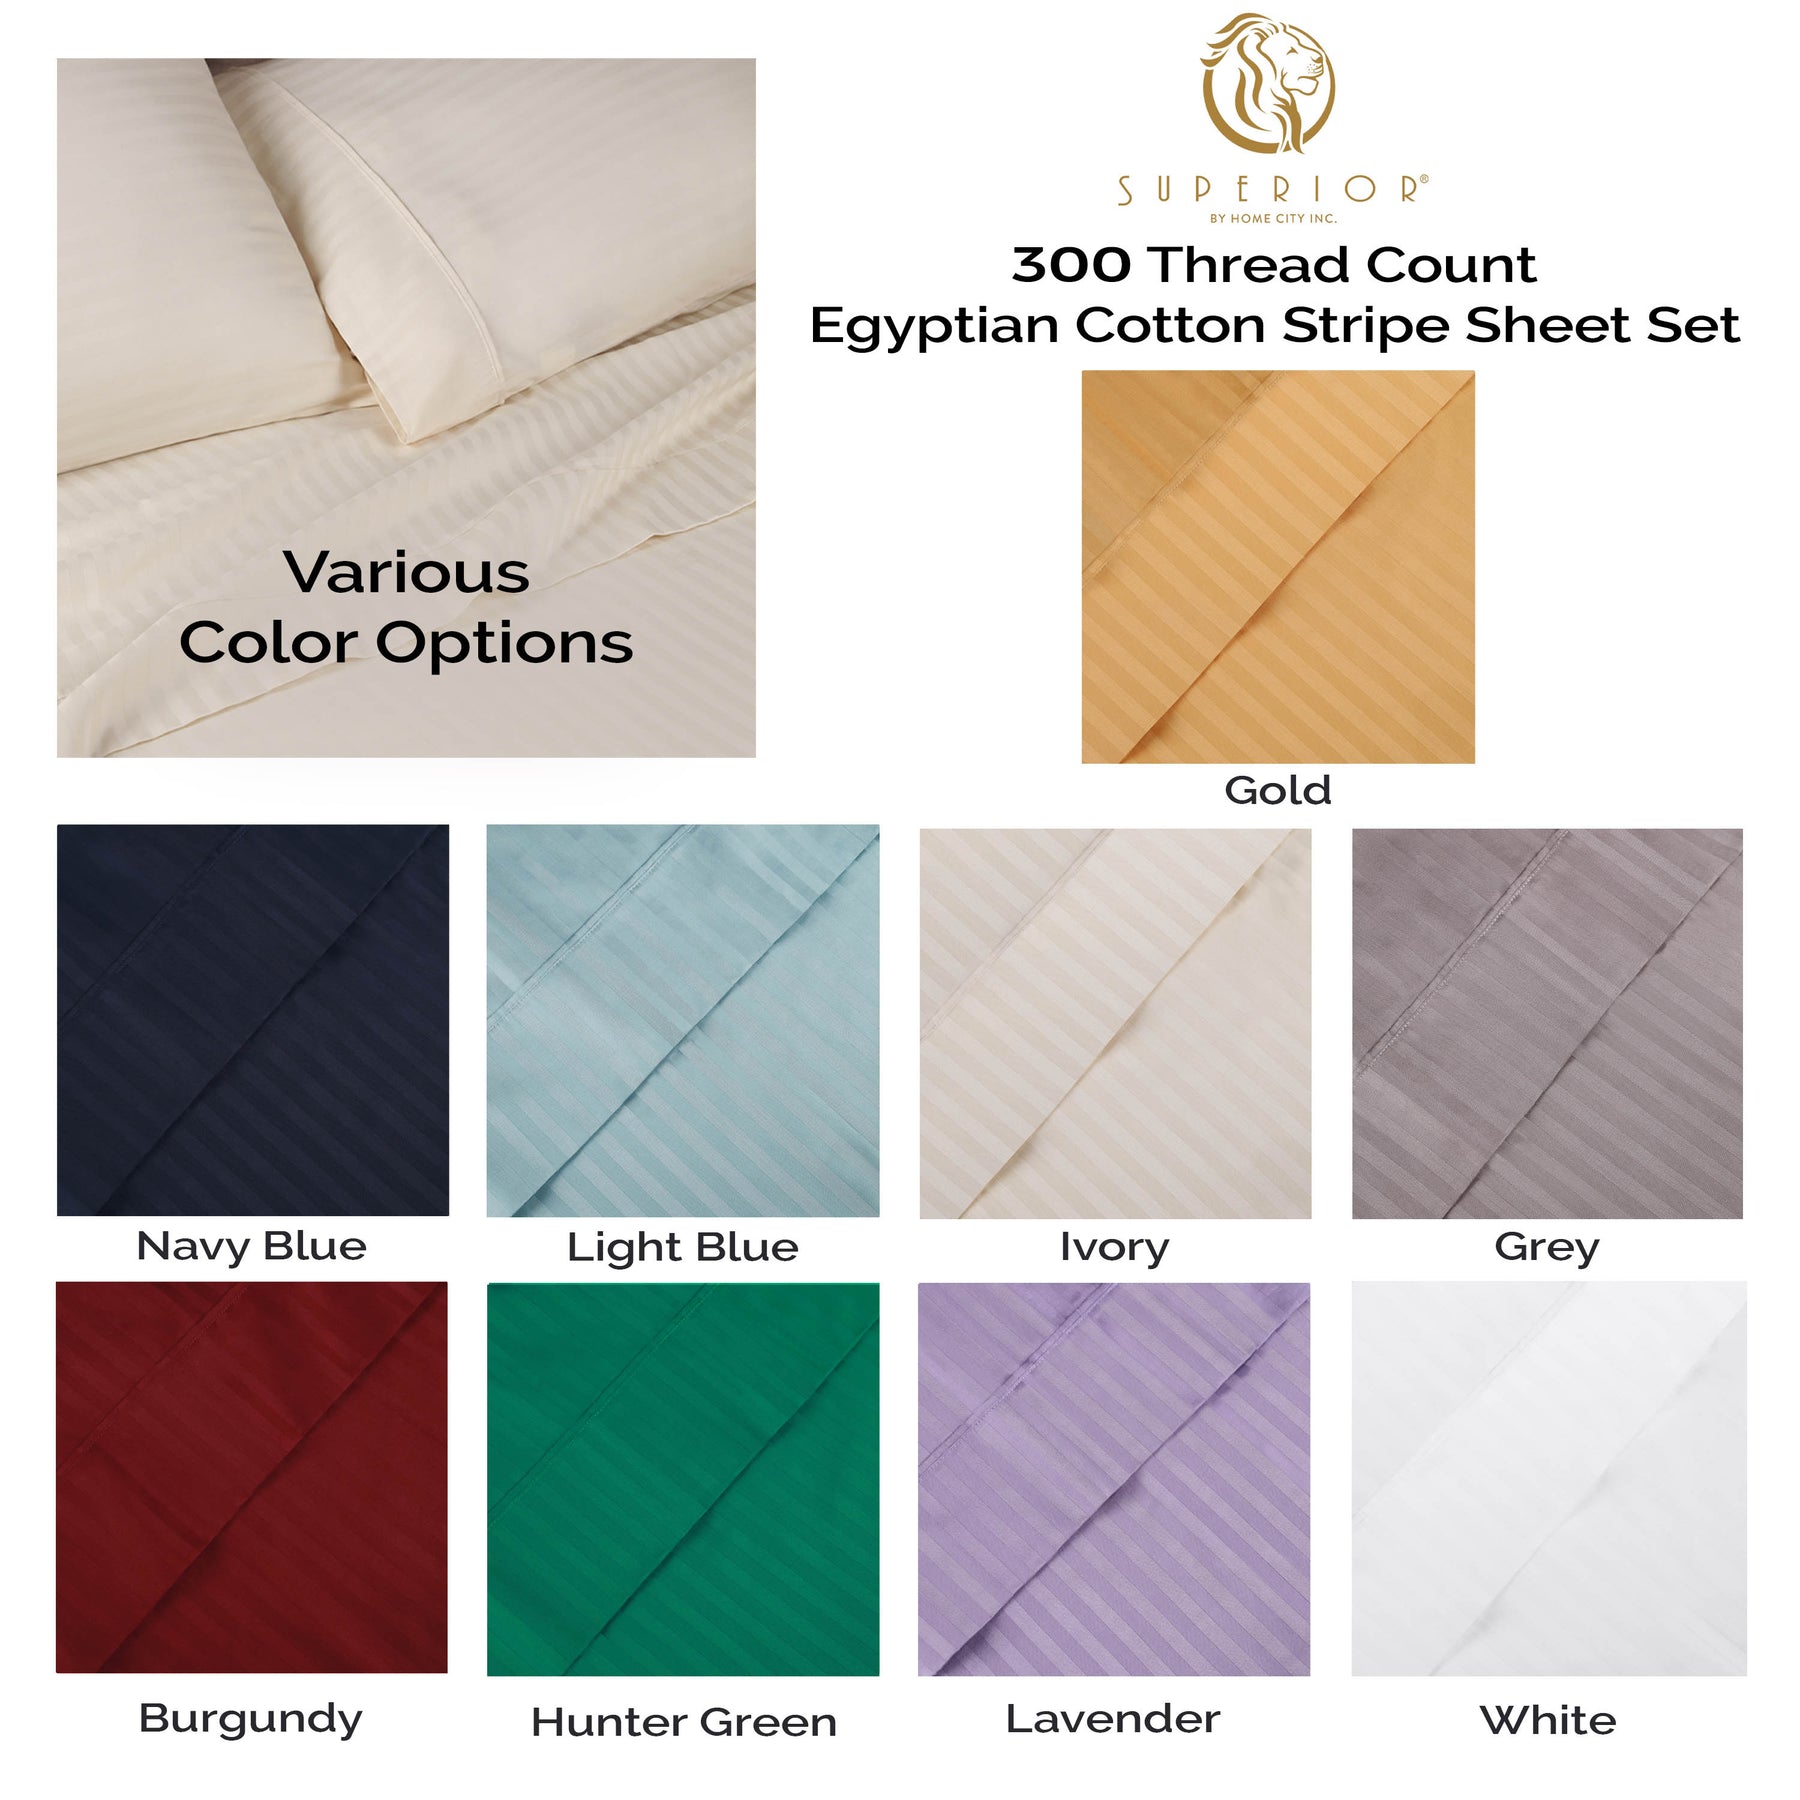 Superior 300 Thread Count Premium Egyptian Cotton Stripe Sheet Set - Beige